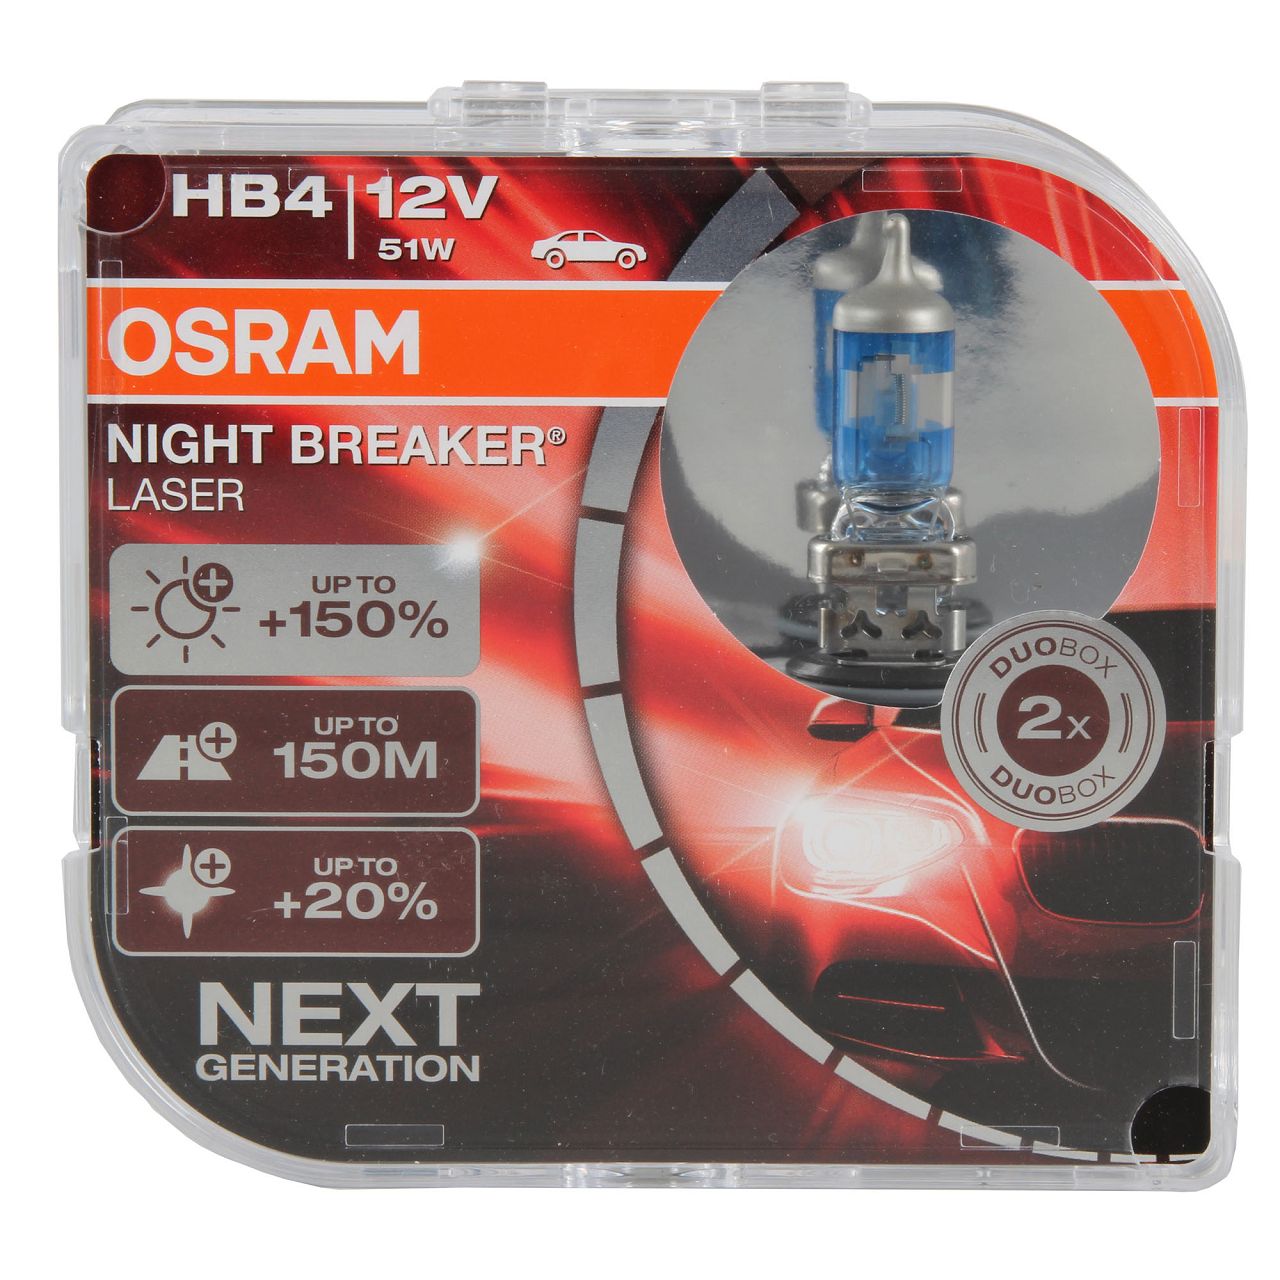 2x OSRAM Glühlampe HB4 NIGHT BREAKER LASER 12V 51W P22d next Generation +150%